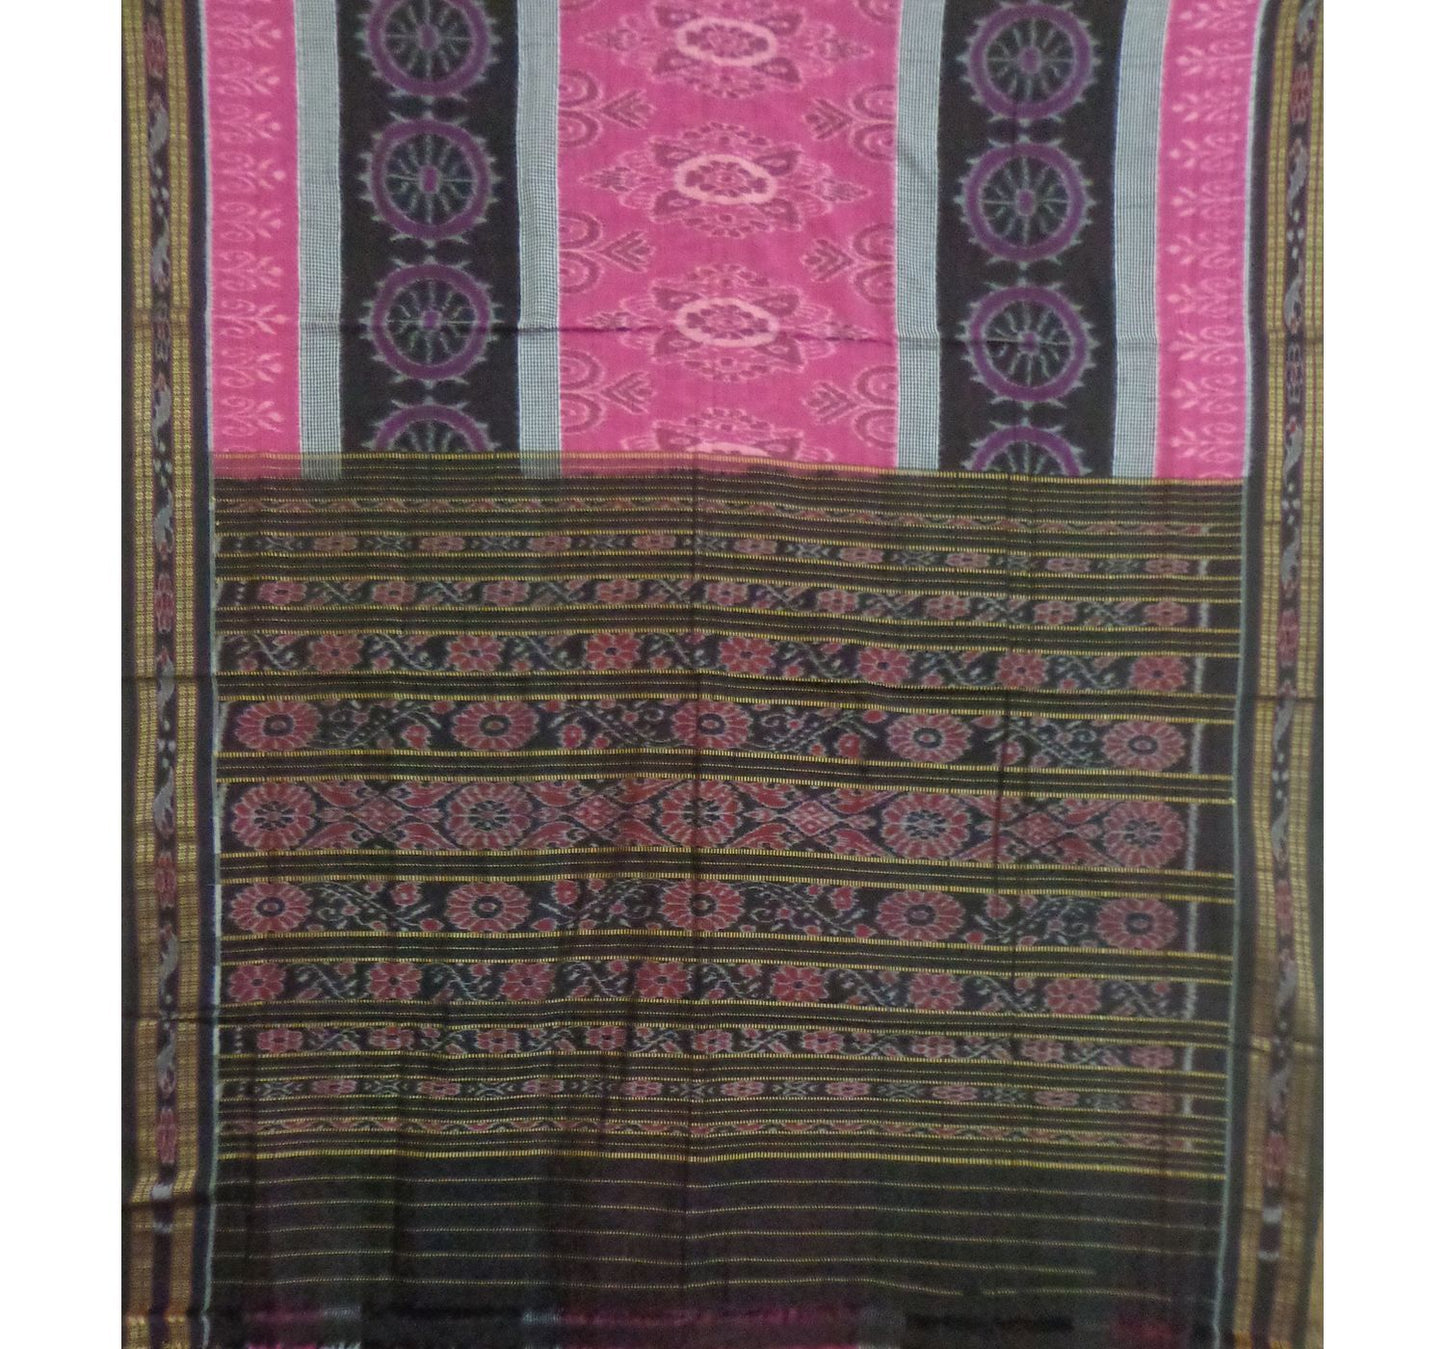 Pink Chakra Designed Handloom Cotton Saree